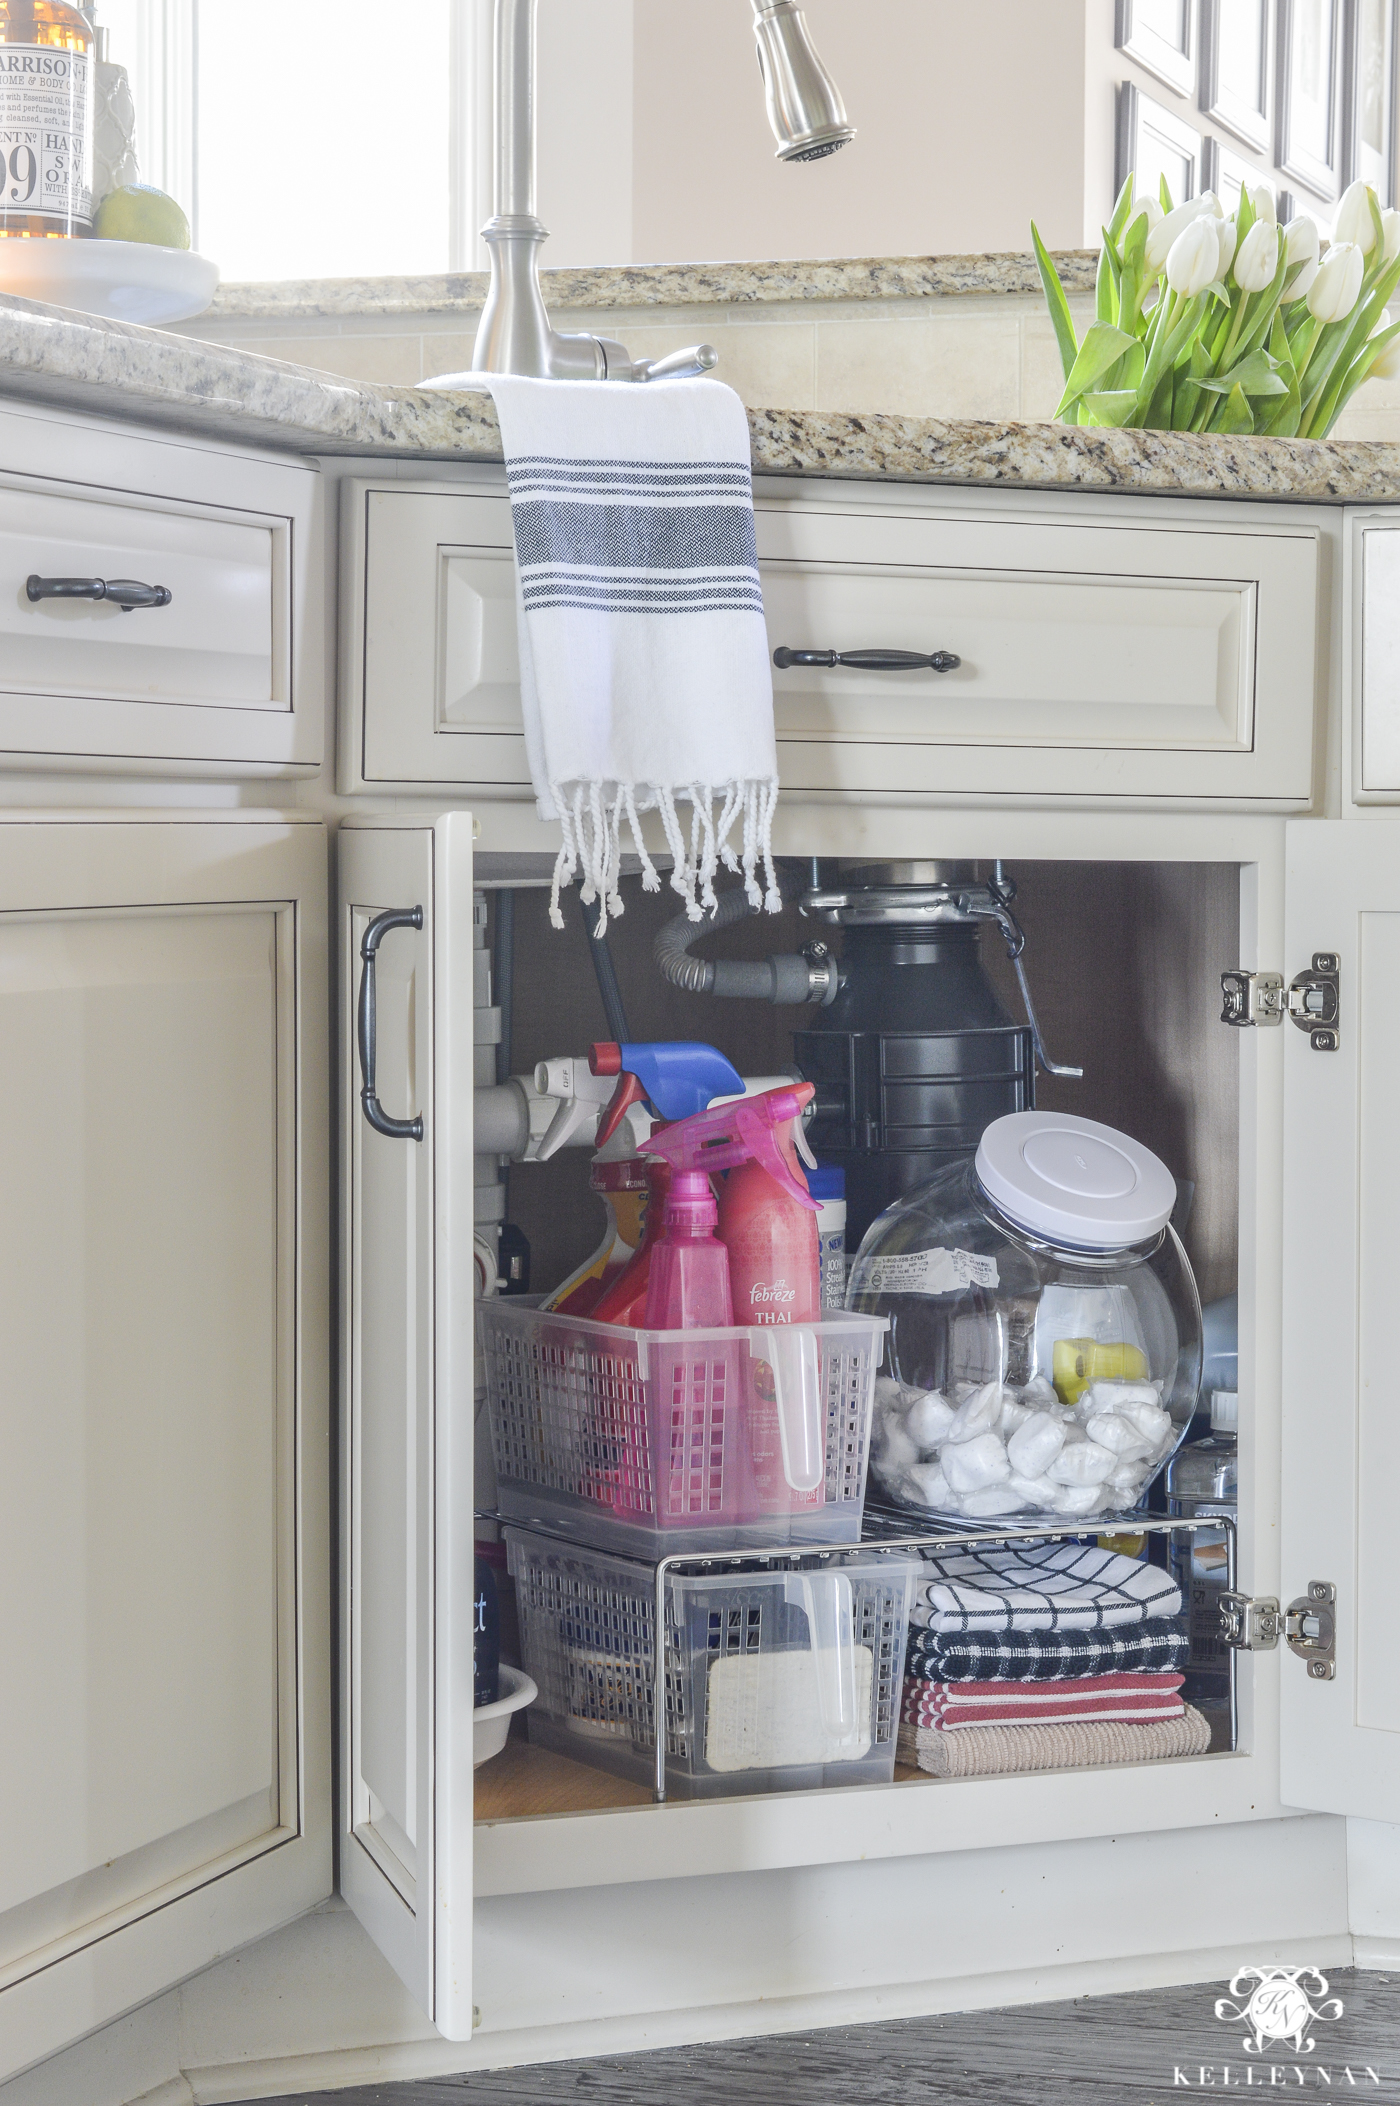 https://kelleynan.com/wp-content/uploads/2017/02/Organization-Ideas-for-Under-the-Kitchen-Sink-Cleaning-Supplies-10-of-12.jpg